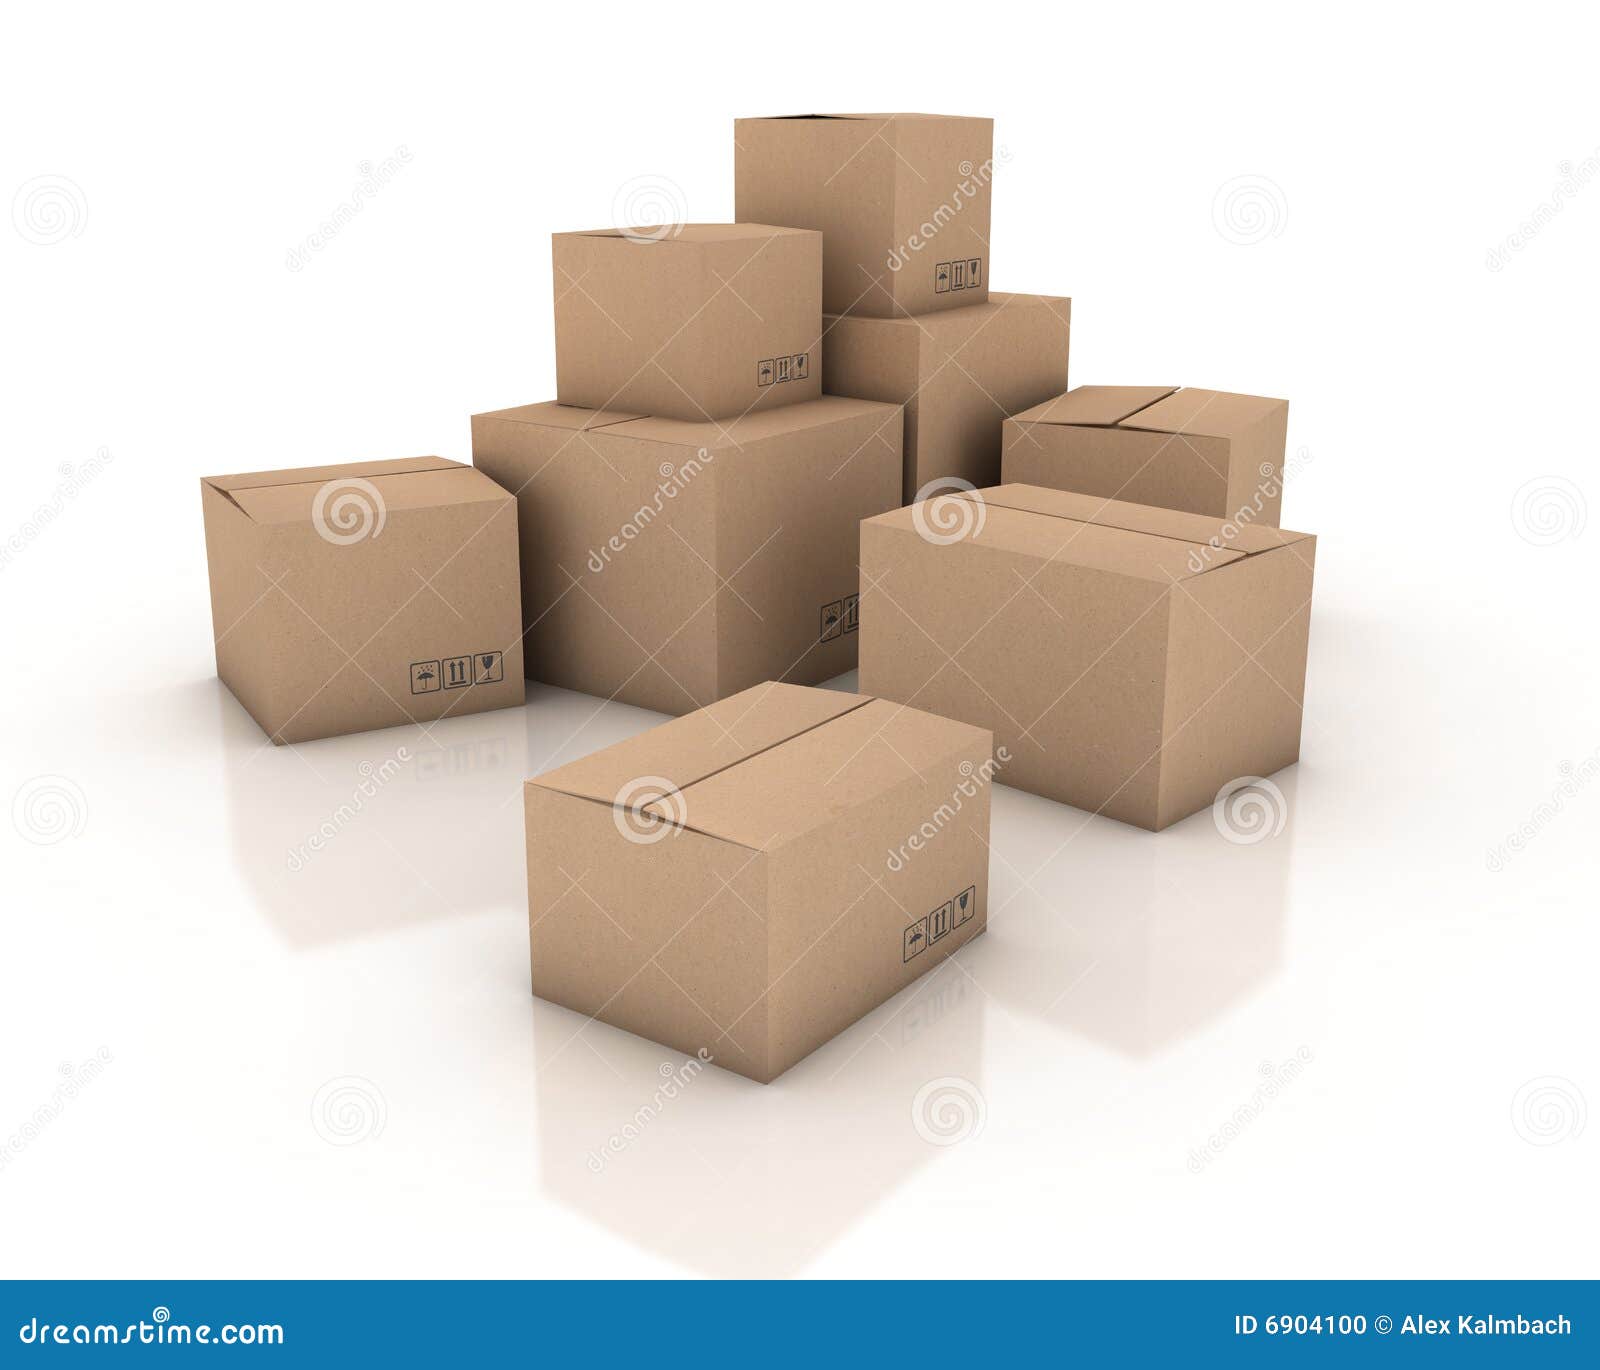 cardboard boxes stock market